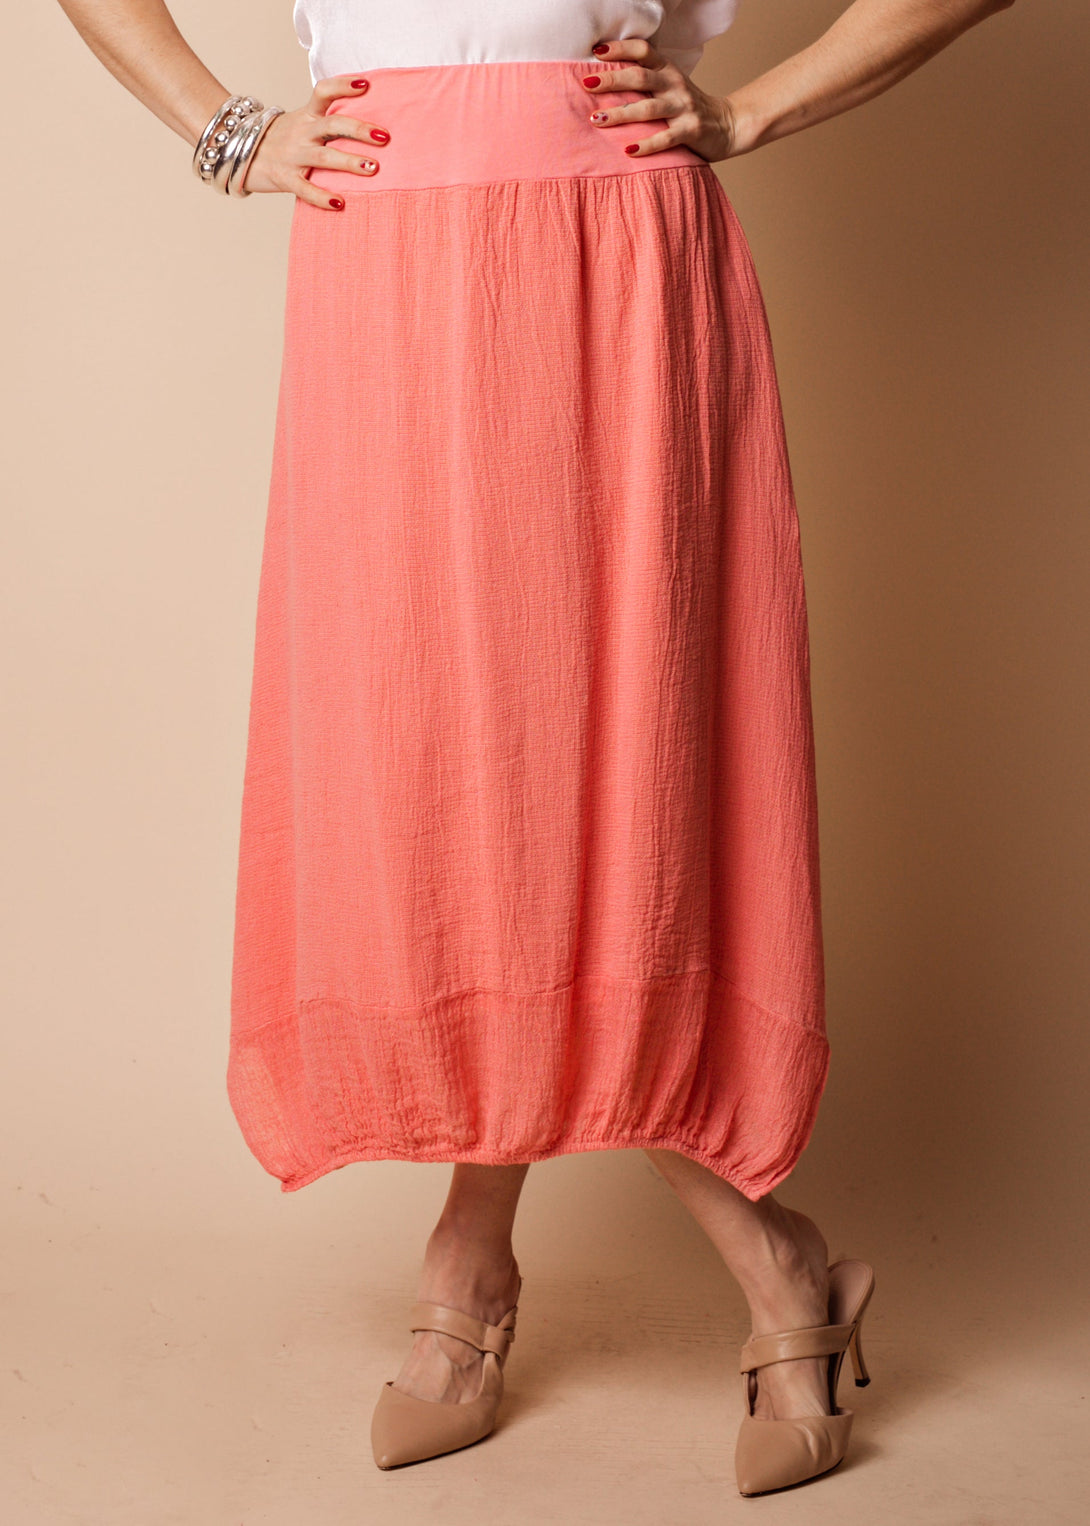 Leela Linen Skirt in Coral Crush - Imagine Fashion